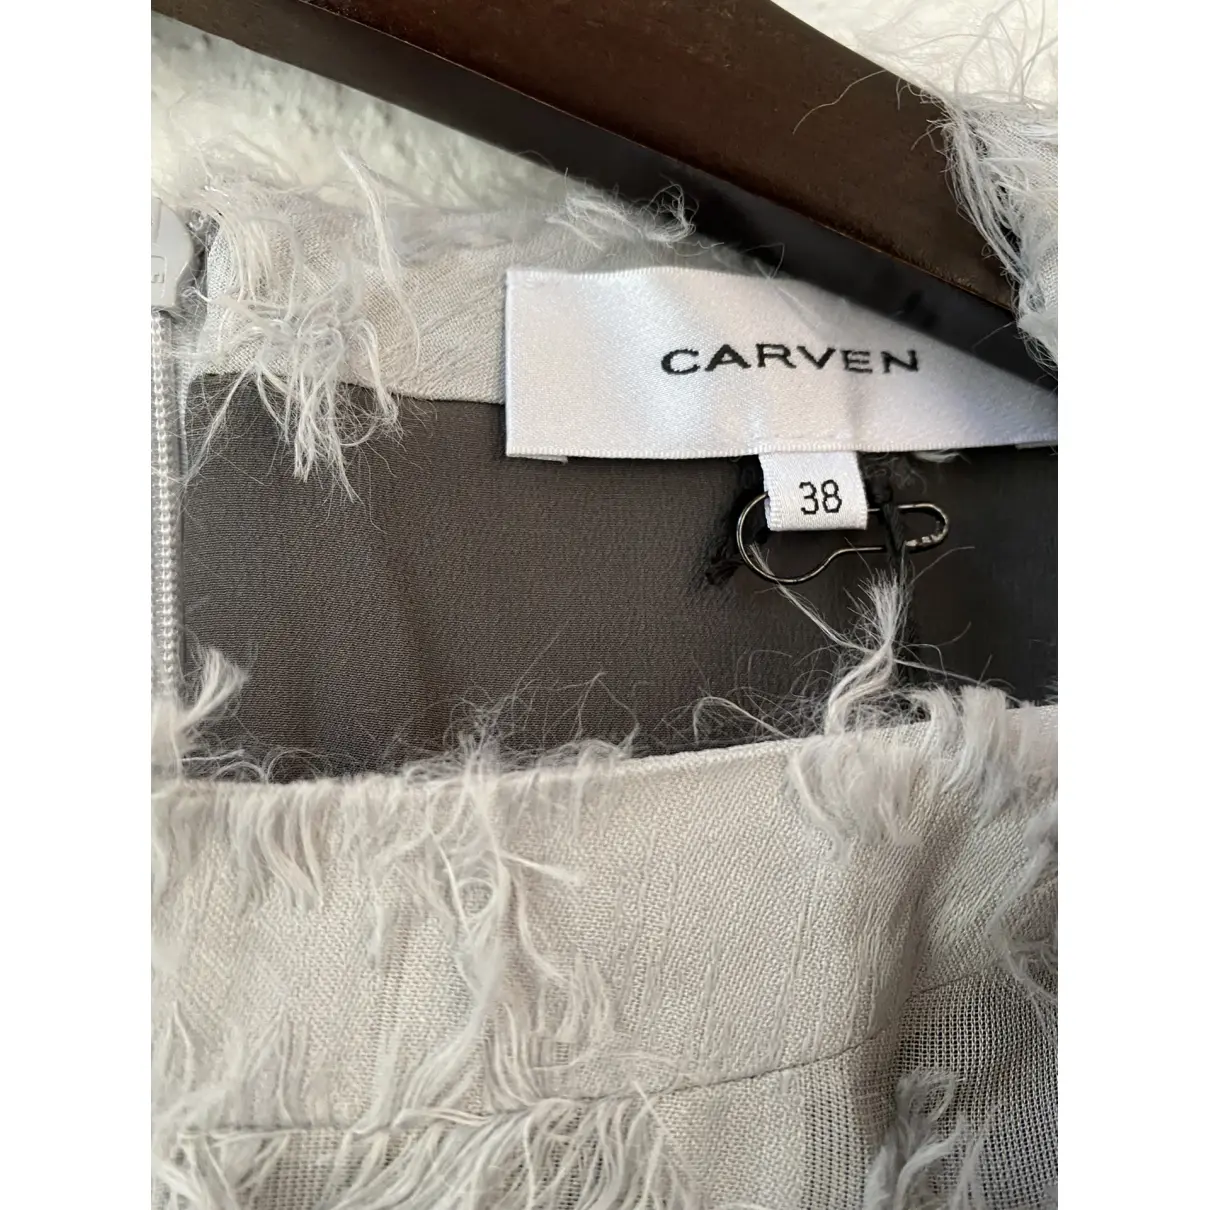 Buy Carven Maxi dress online